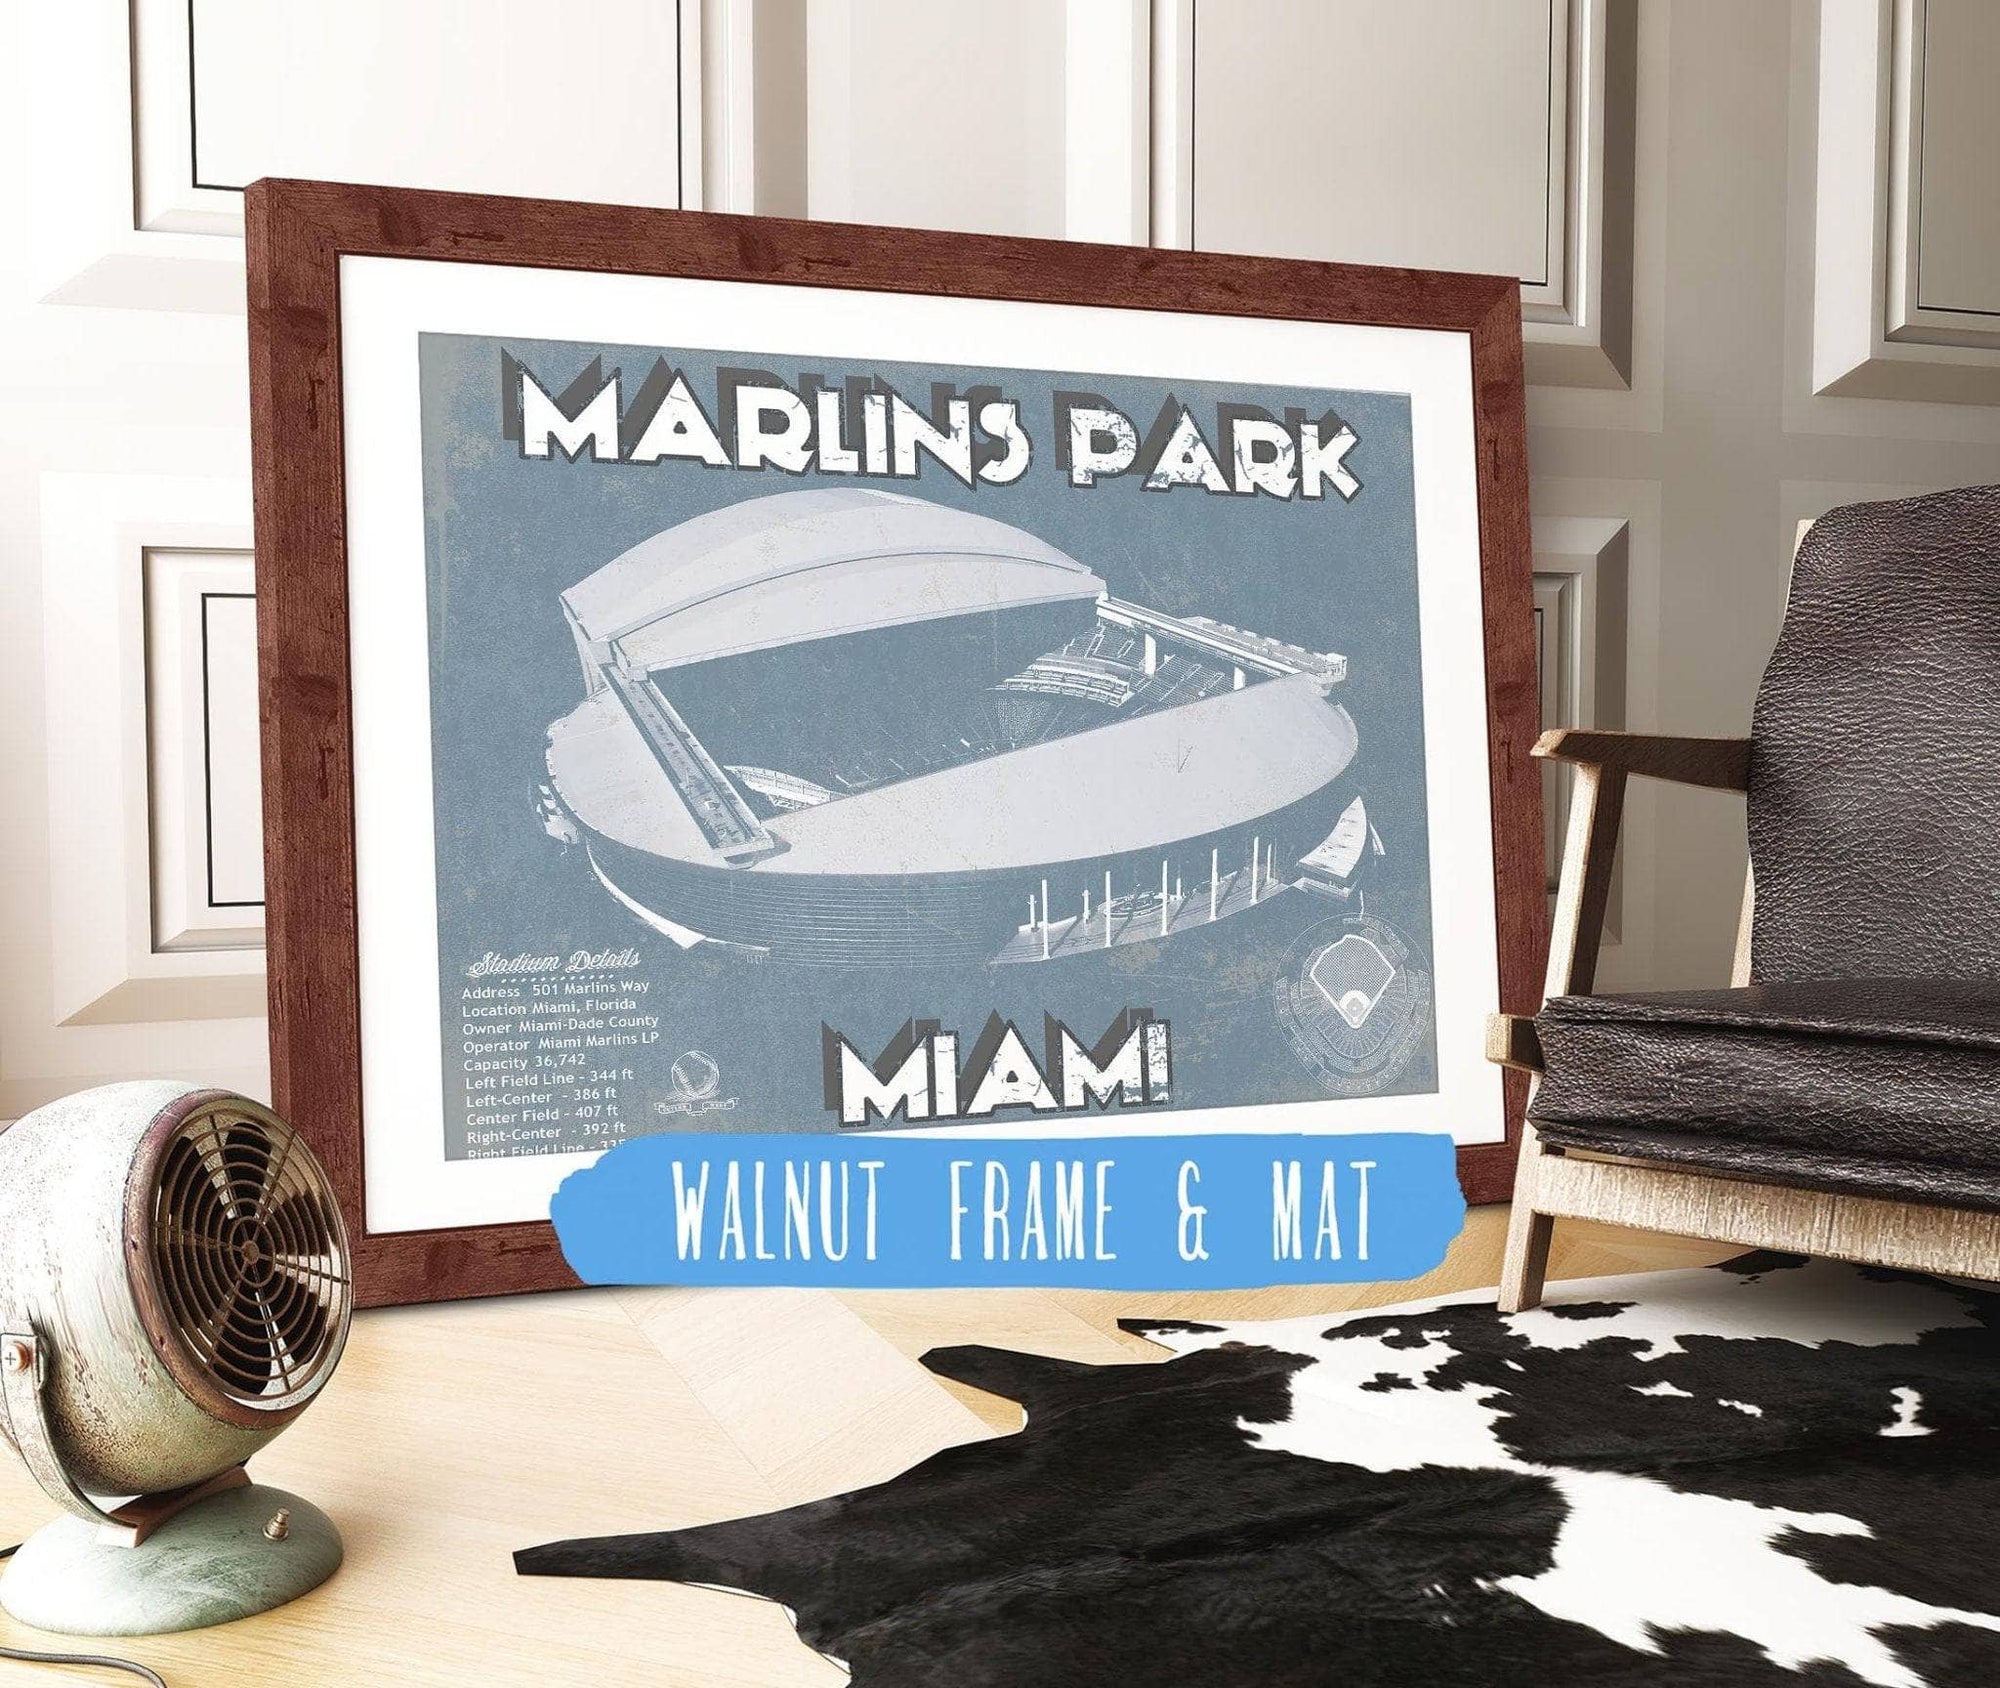 Cutler West Baseball Collection 14" x 11" / Walnut Frame & Mat Miami Marlins - Marlins Park Vintage Baseball Fan Print 718123457_73533